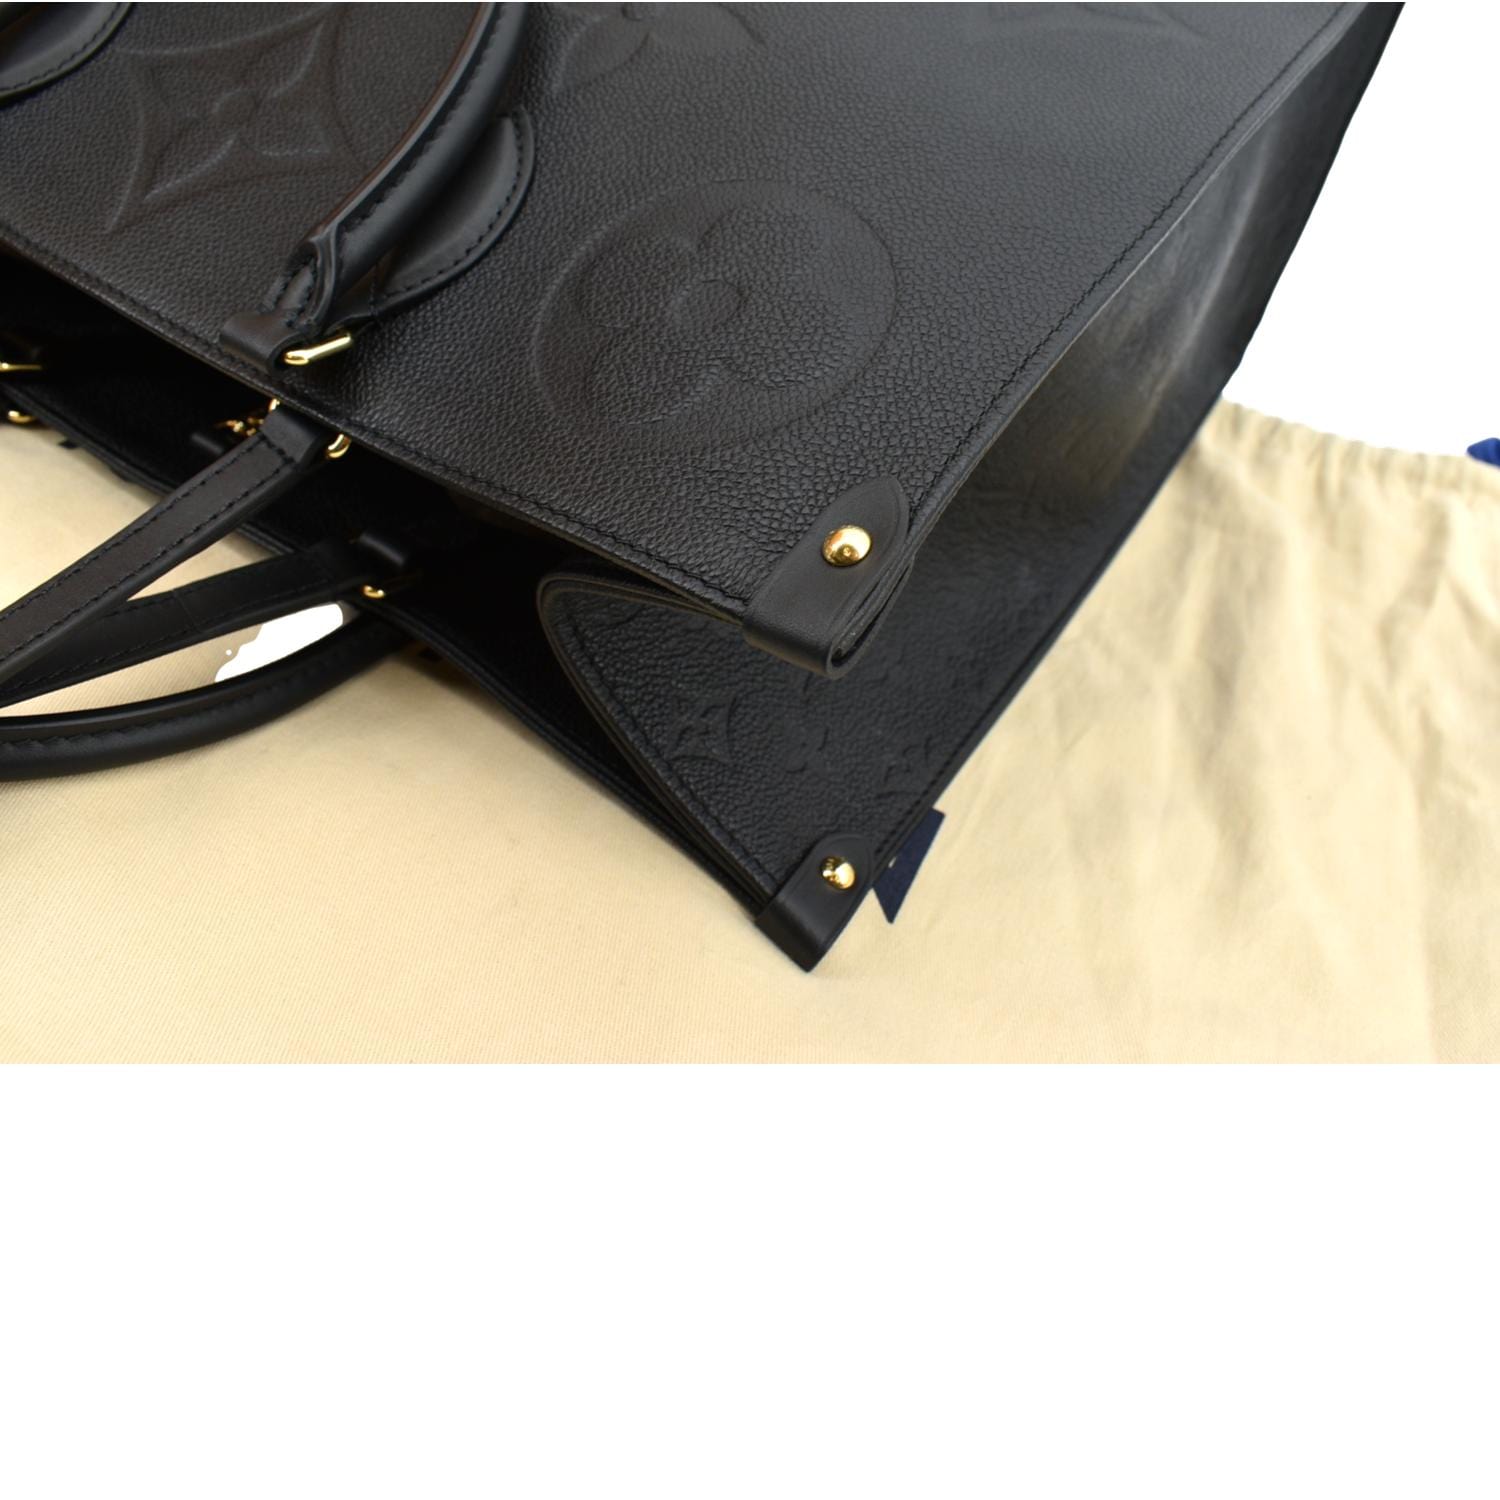 OnTheGo GM Tote Bag Bicolour Monogram Empreinte Leather - Handbags M45945